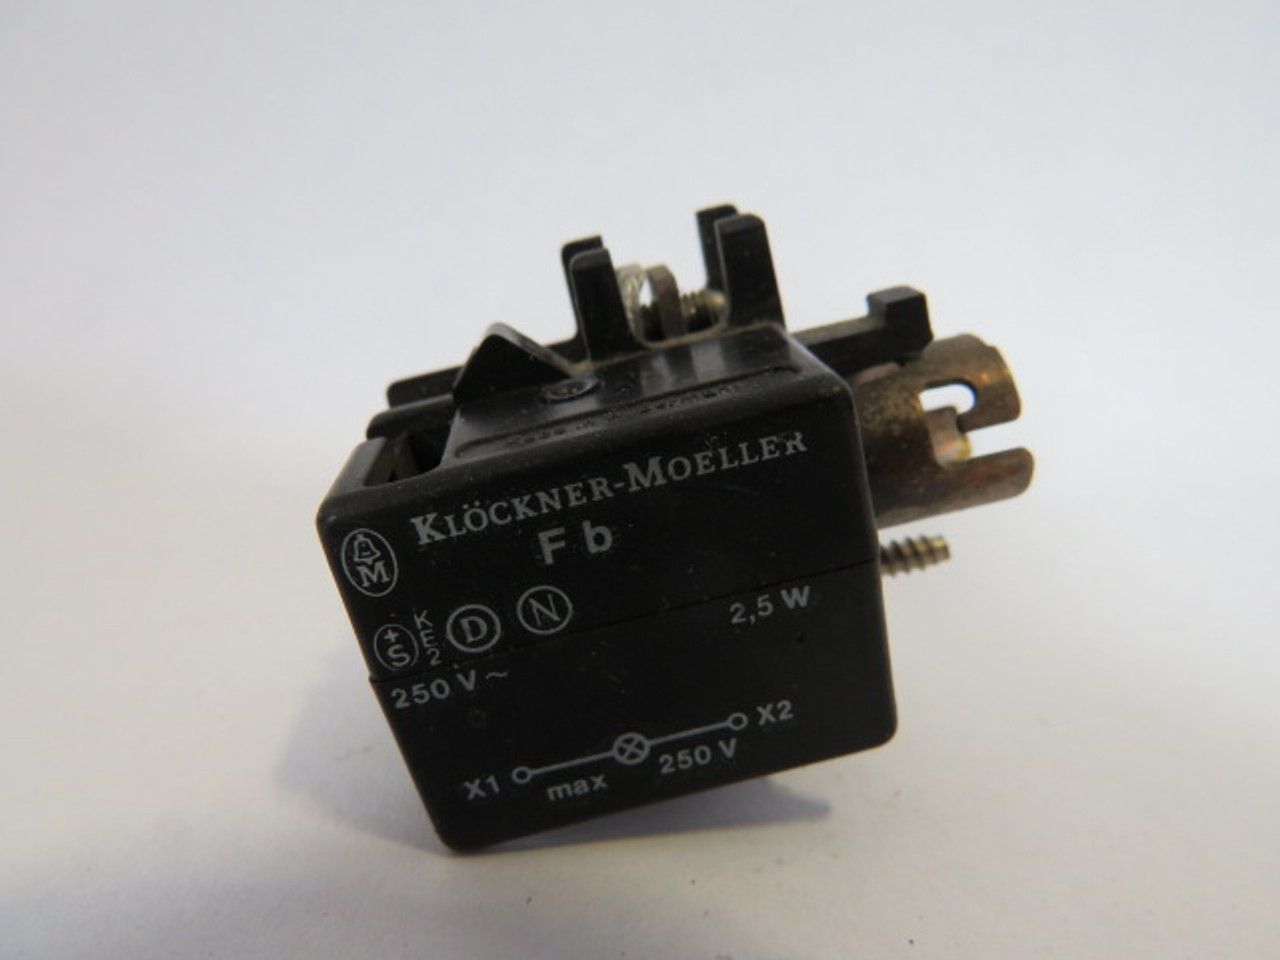 Klockner-Moeller FB Lamp Socket for Push Button 2.5W 250VAC USED